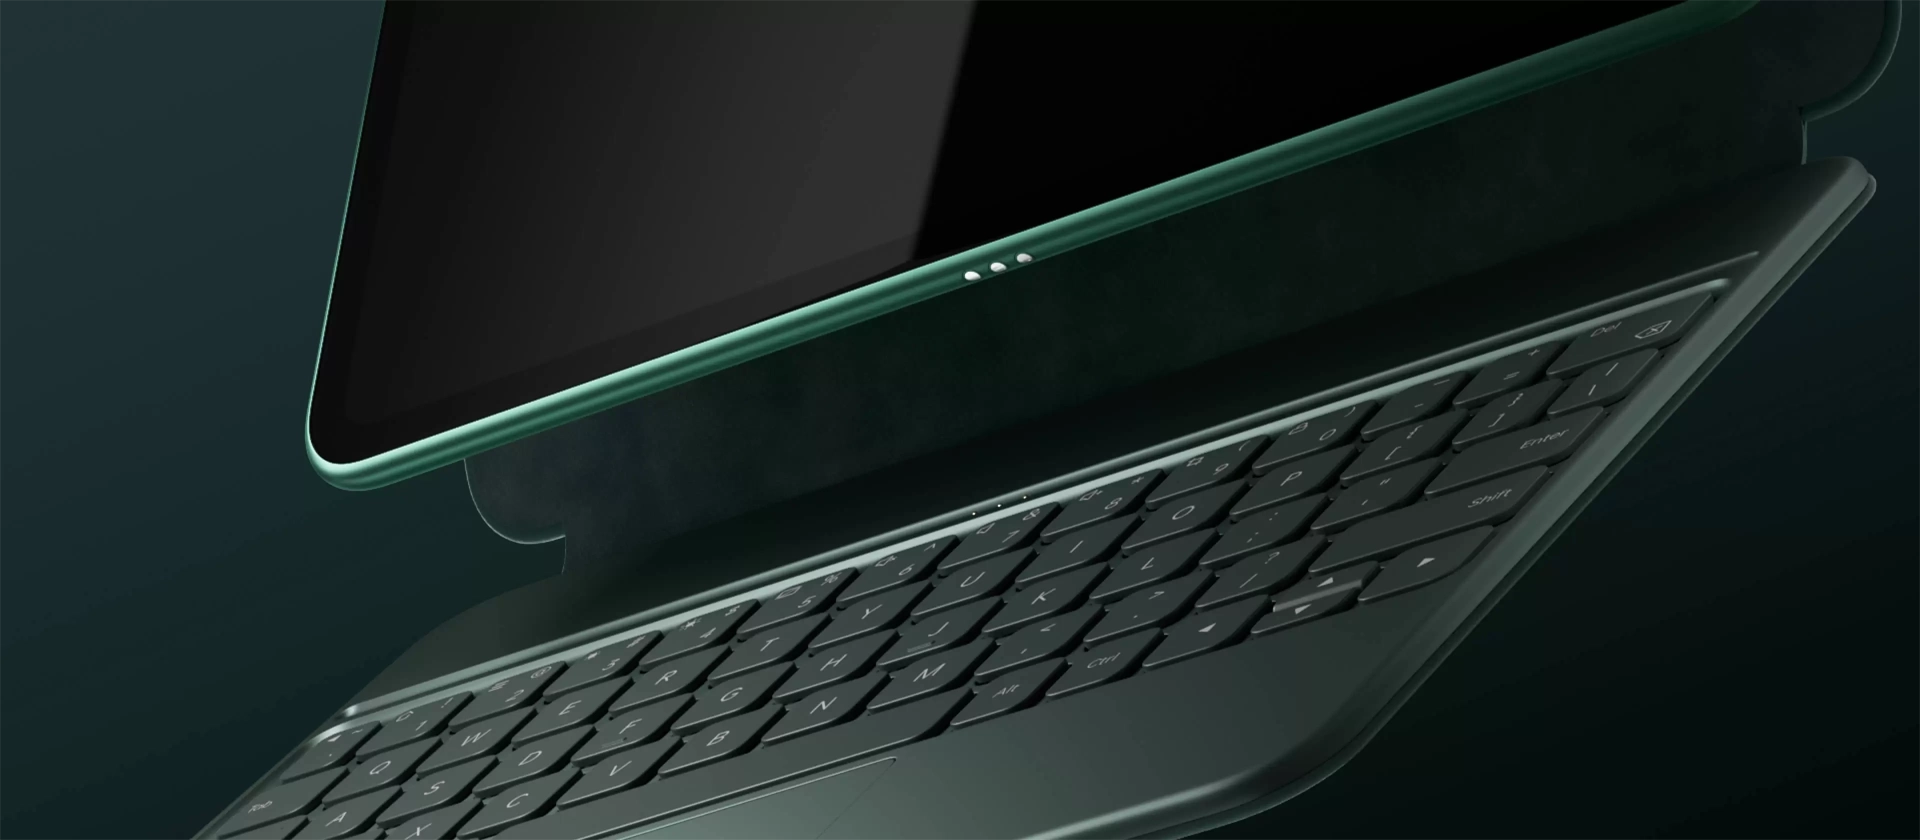 OnePlus Magnetic Keyboard